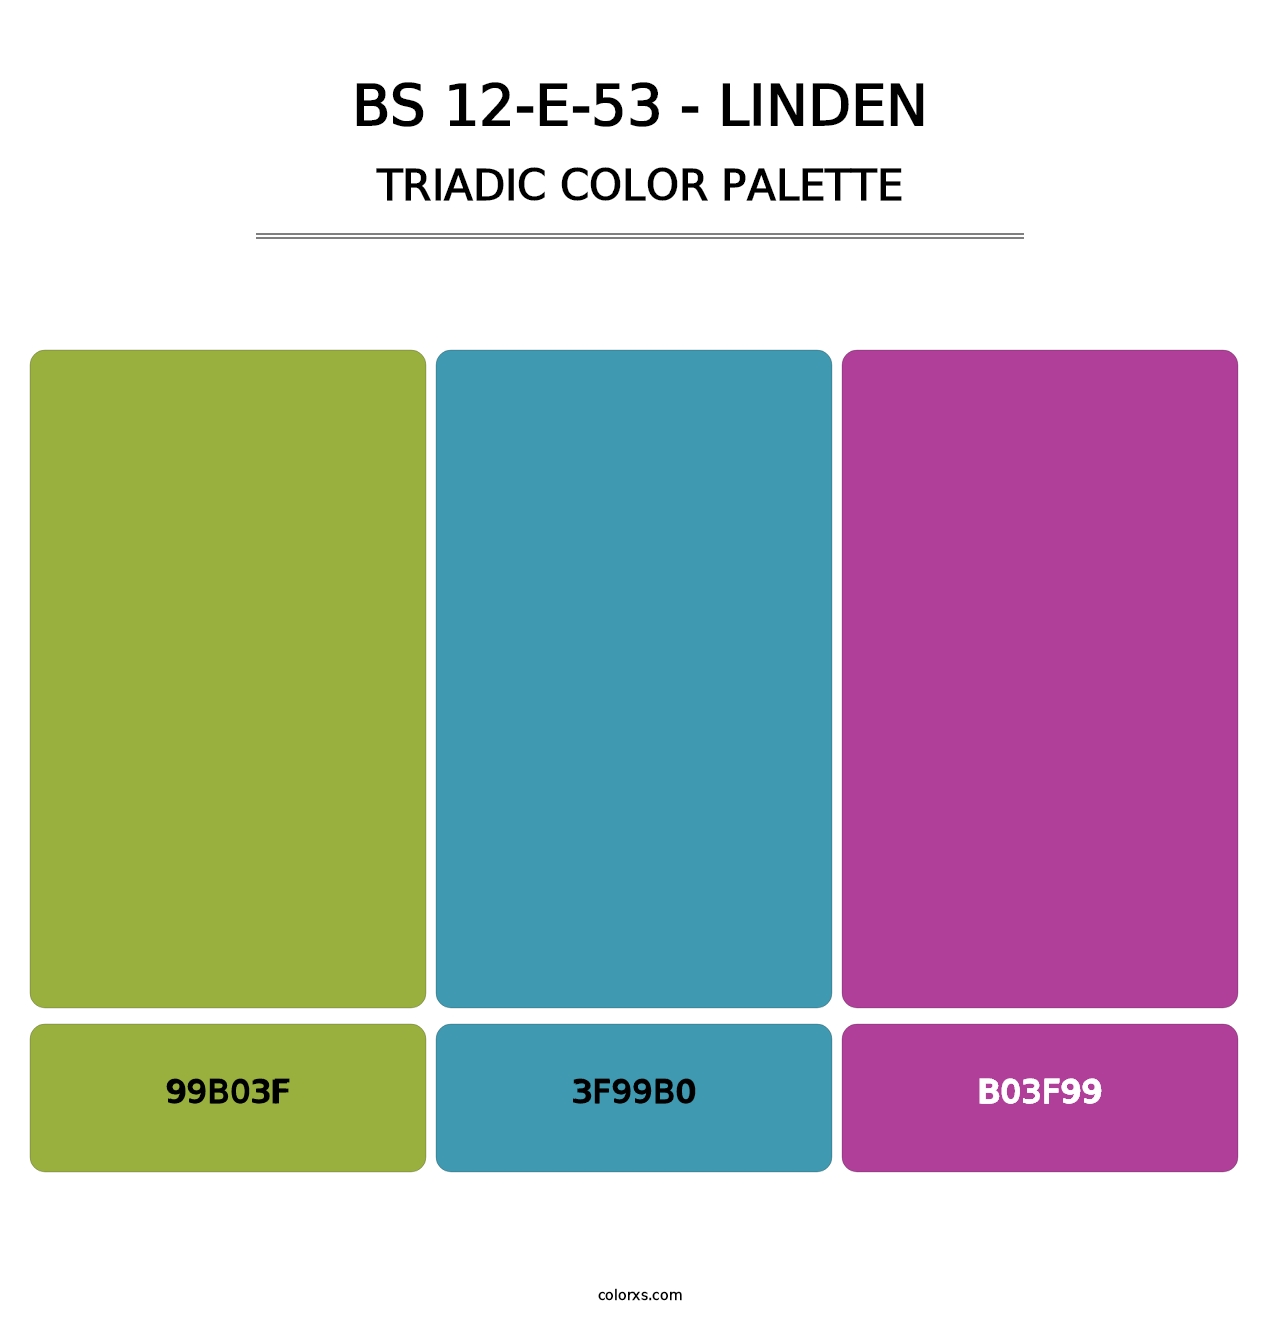 BS 12-E-53 - Linden - Triadic Color Palette